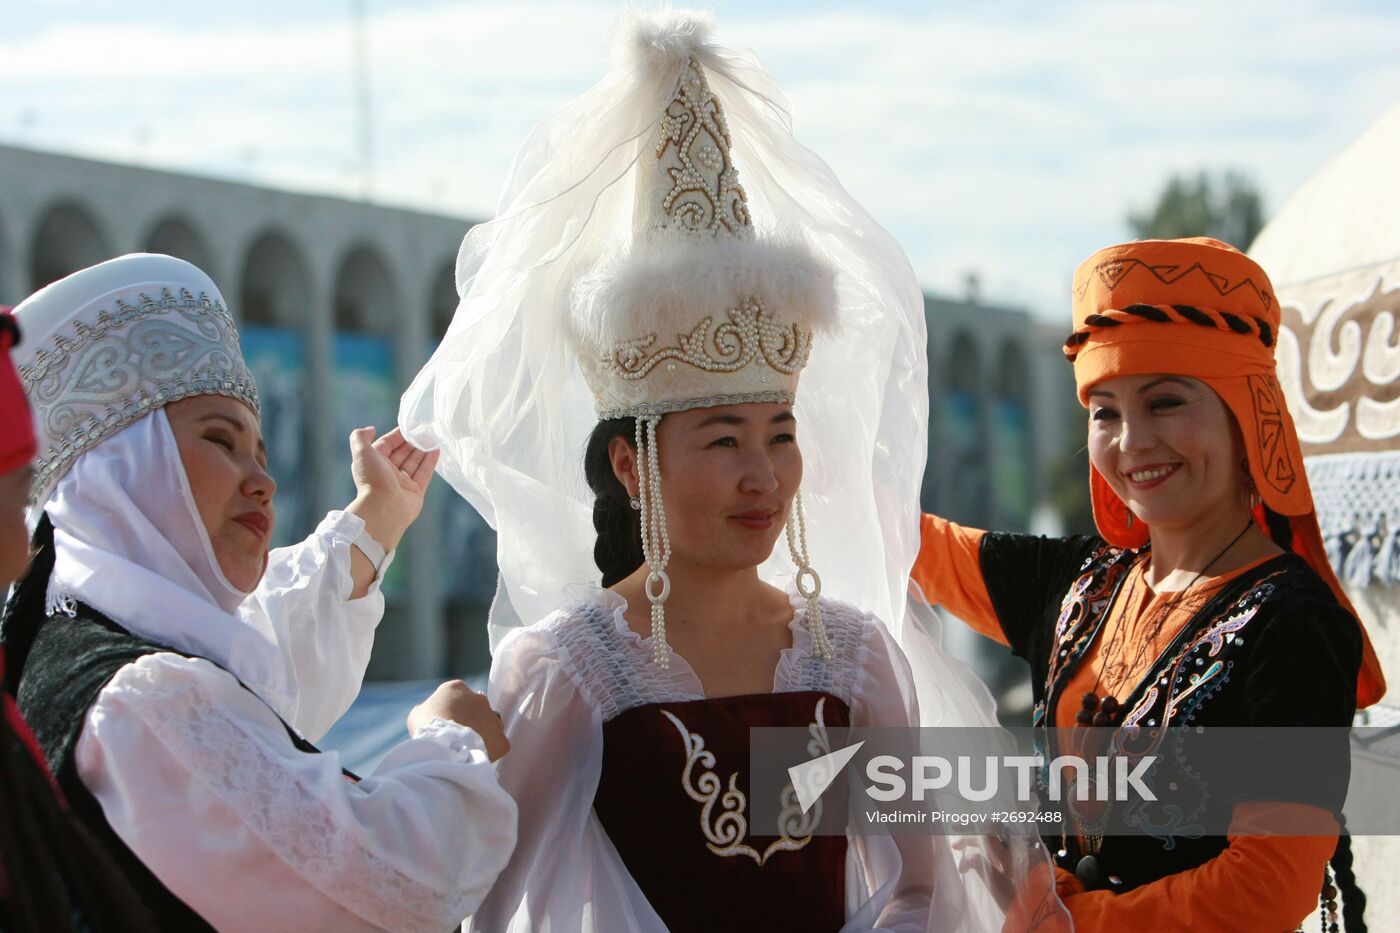 International epos festival in Bishkek